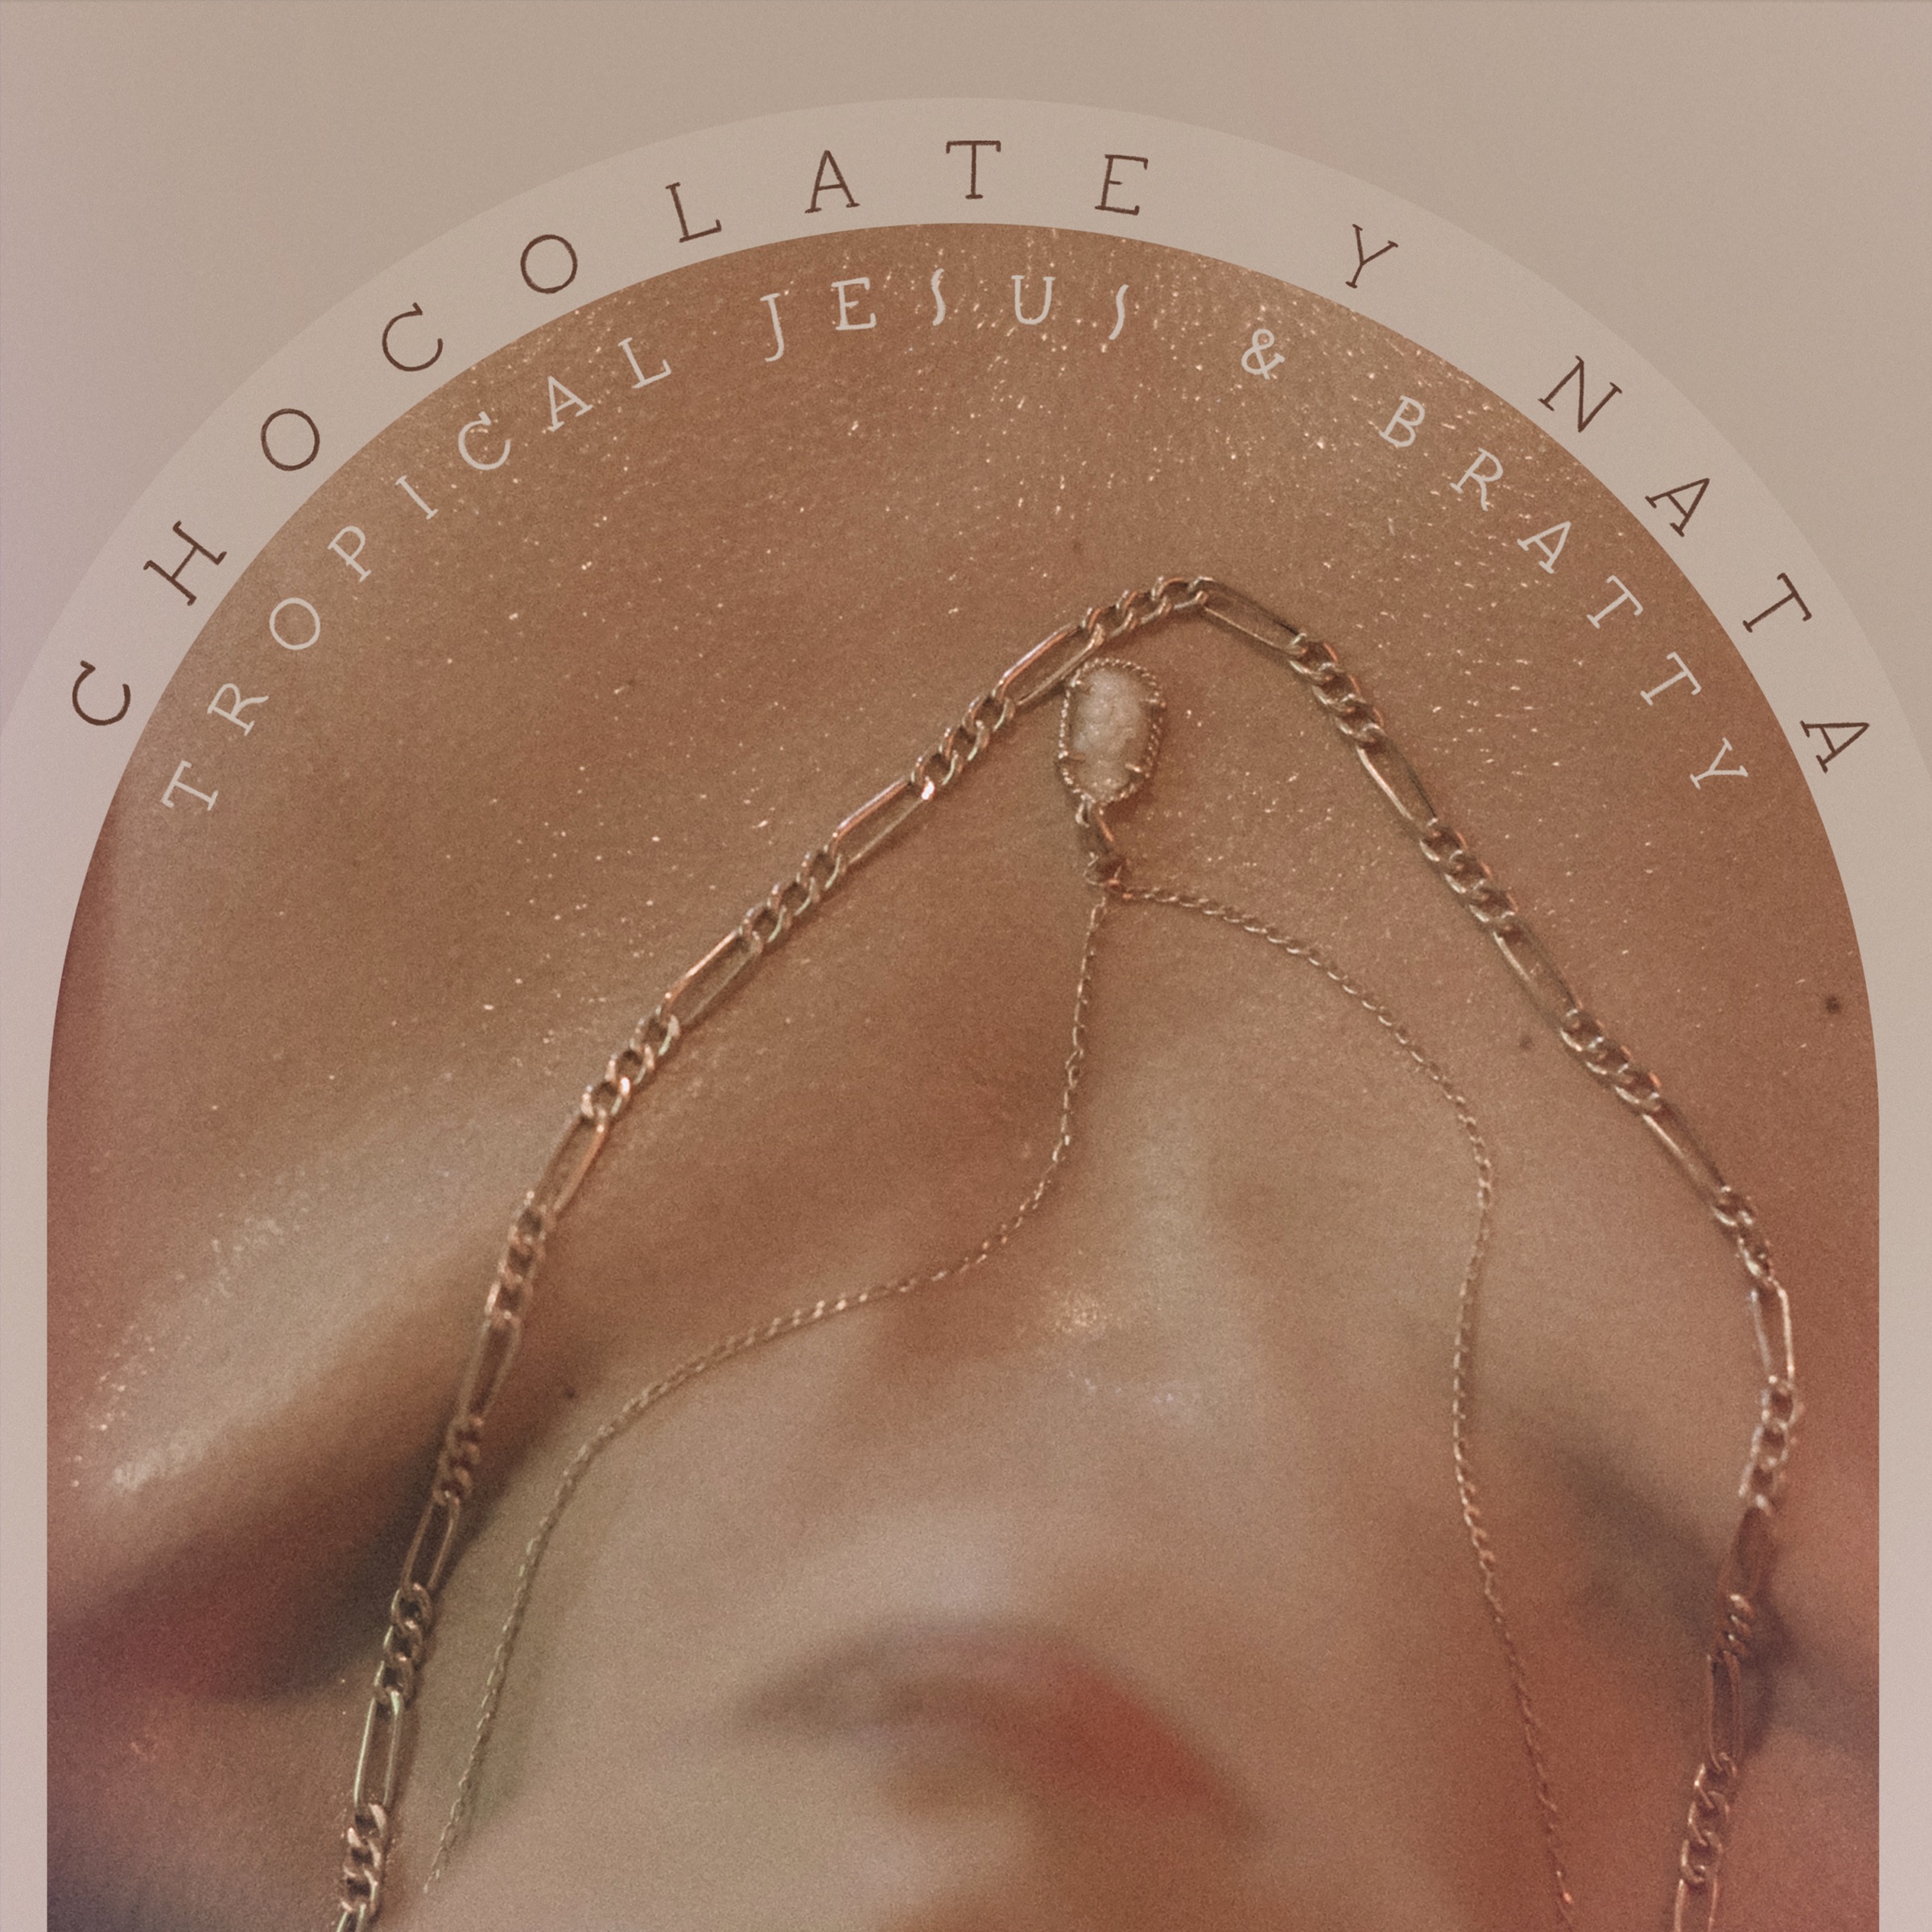 Carlos Sadness & Bratty — Chocolate y nata cover artwork